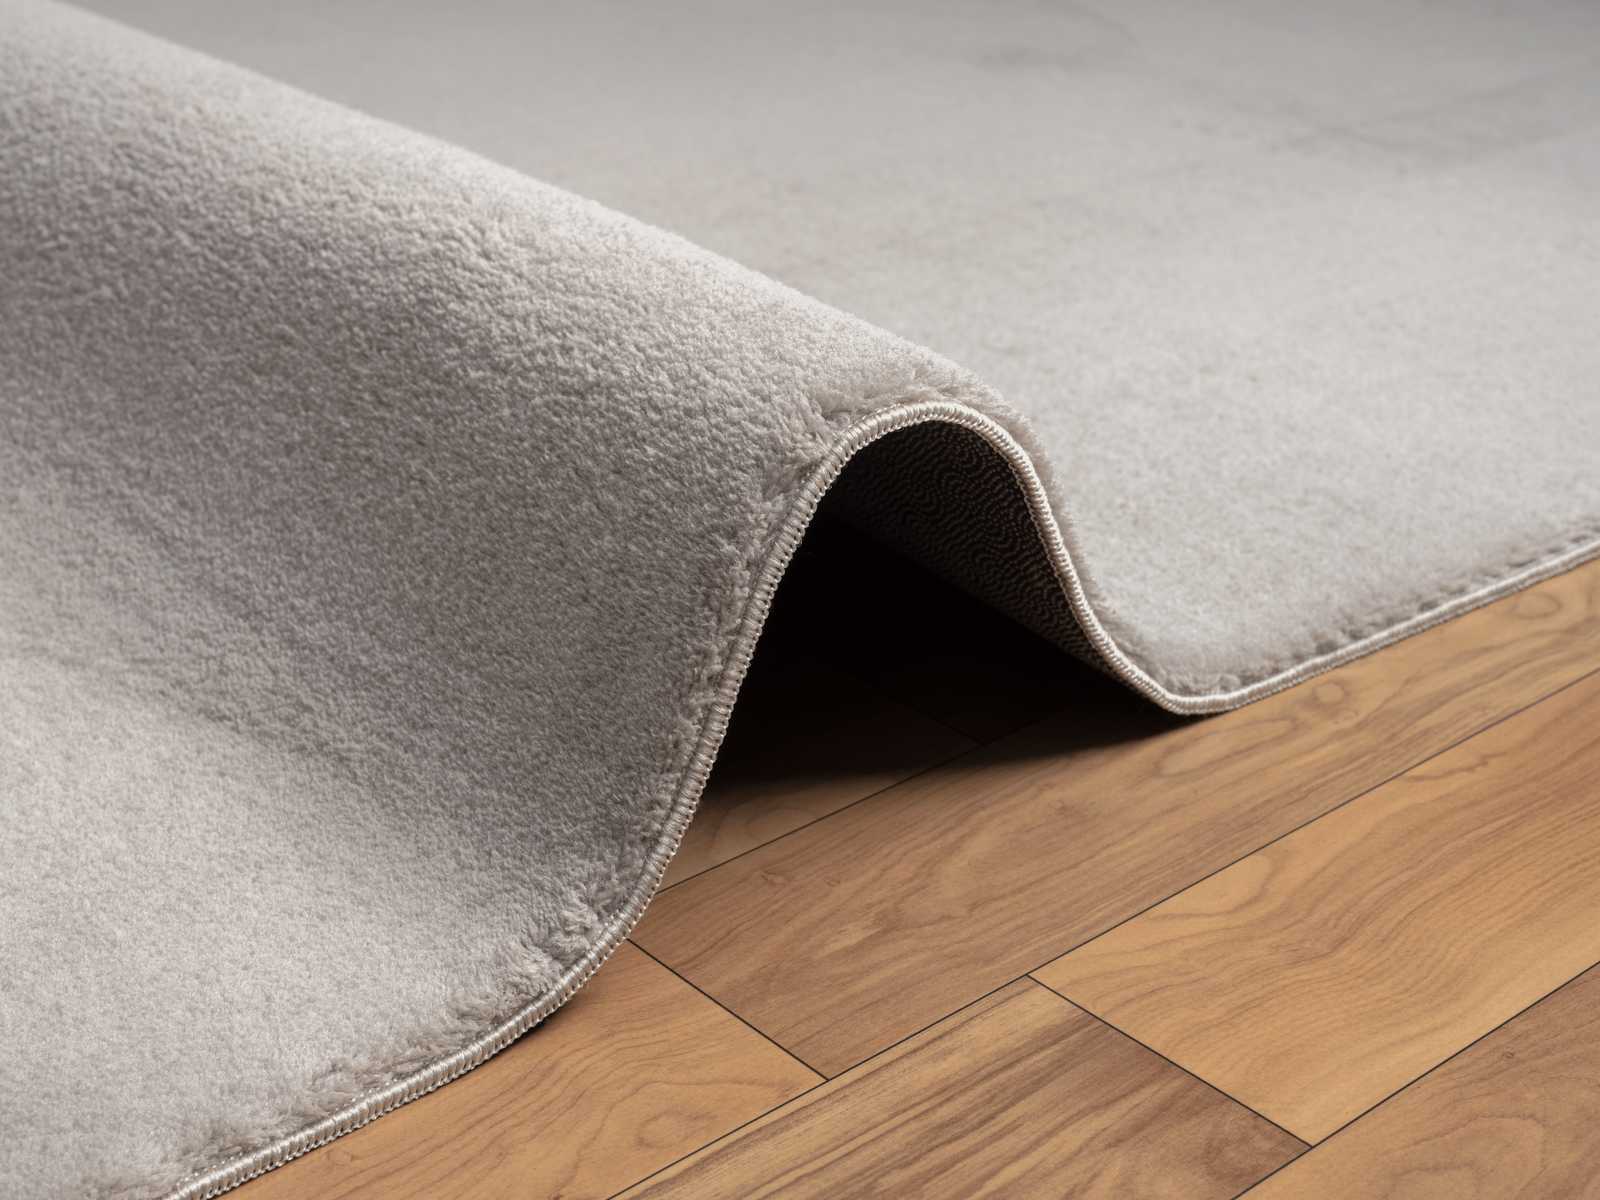             Fashionable high pile carpet in sand - 110 x 60 cm
        